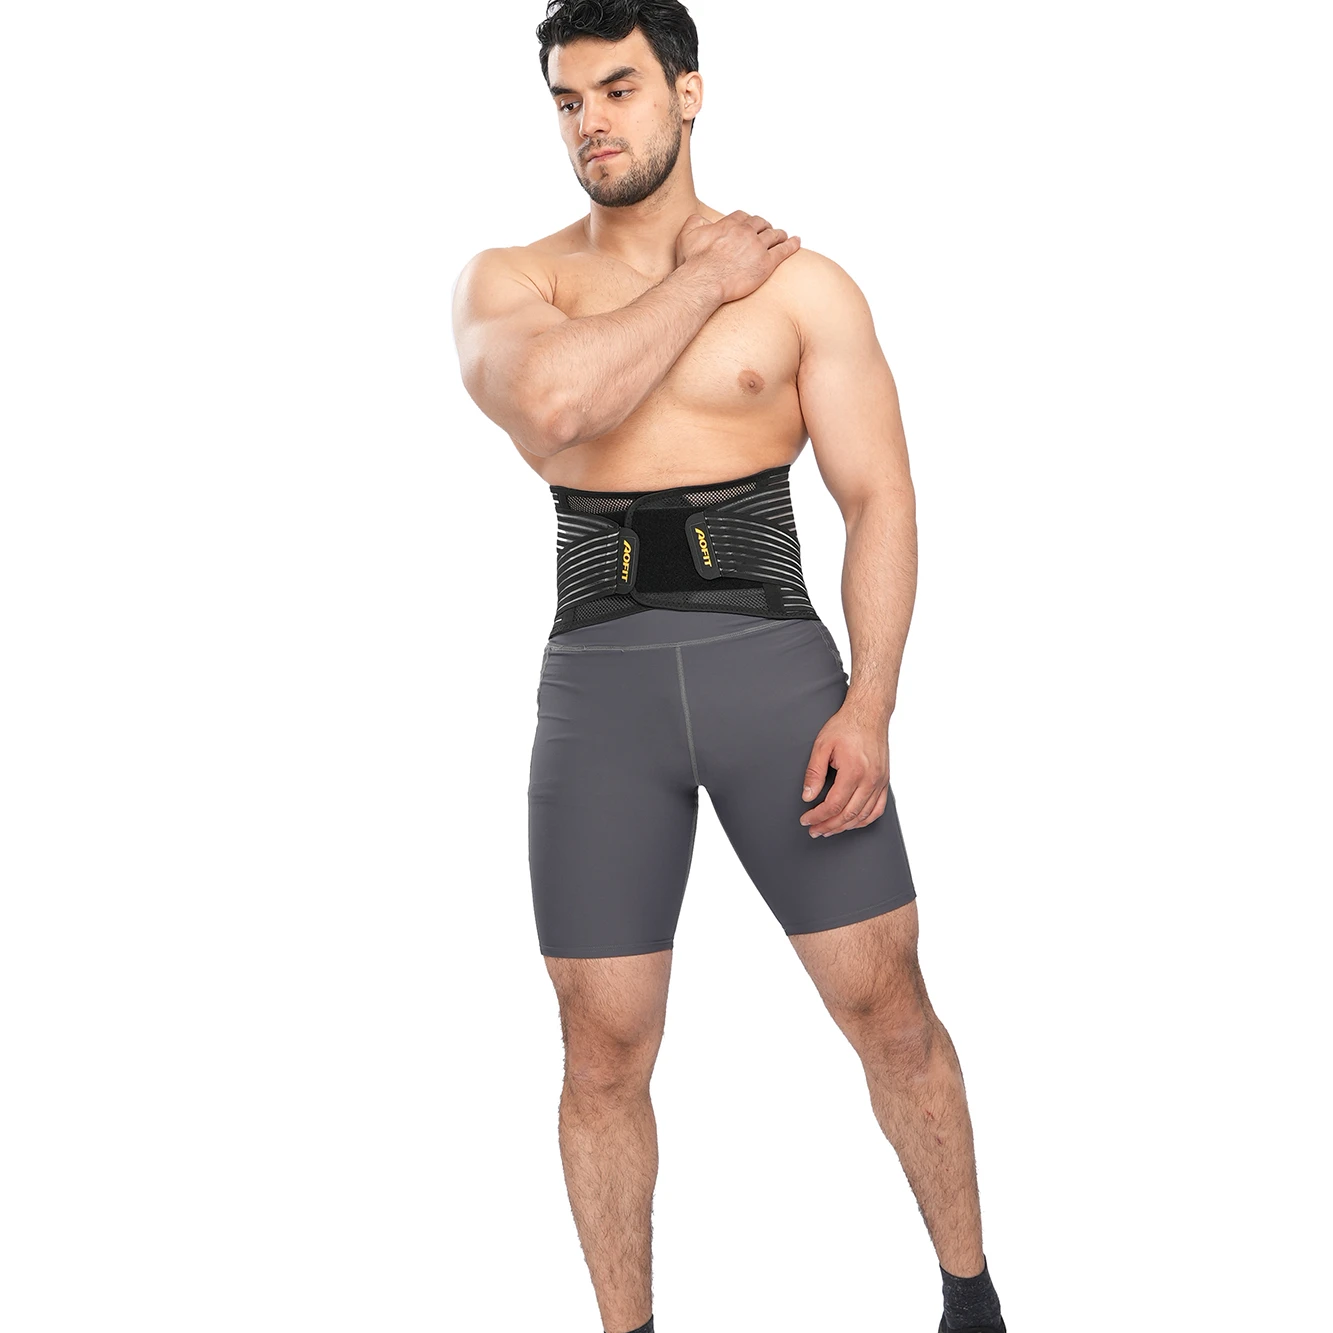 

Working Lumbar Belt Thermal Slim Waist Trainer Waist Trimmer Lower Waist Support Brace Lower Back Spine Pain Belt for Women Men, Black